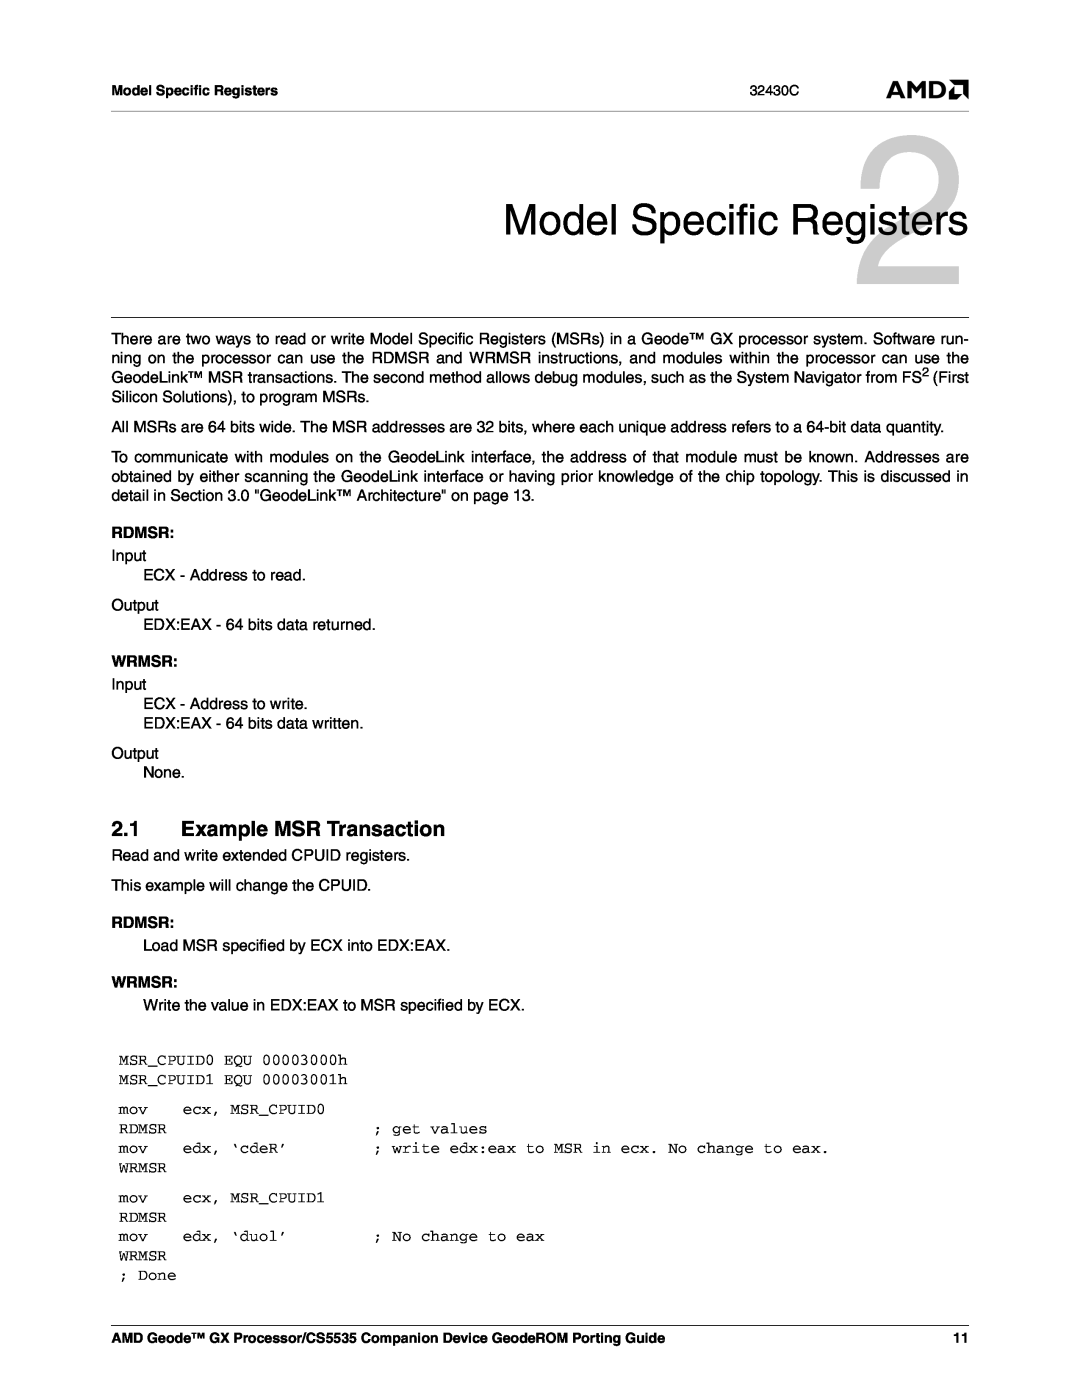 AMD CS5535 manual Model Specific Registers2, Example MSR Transaction, Rdmsr, Wrmsr 